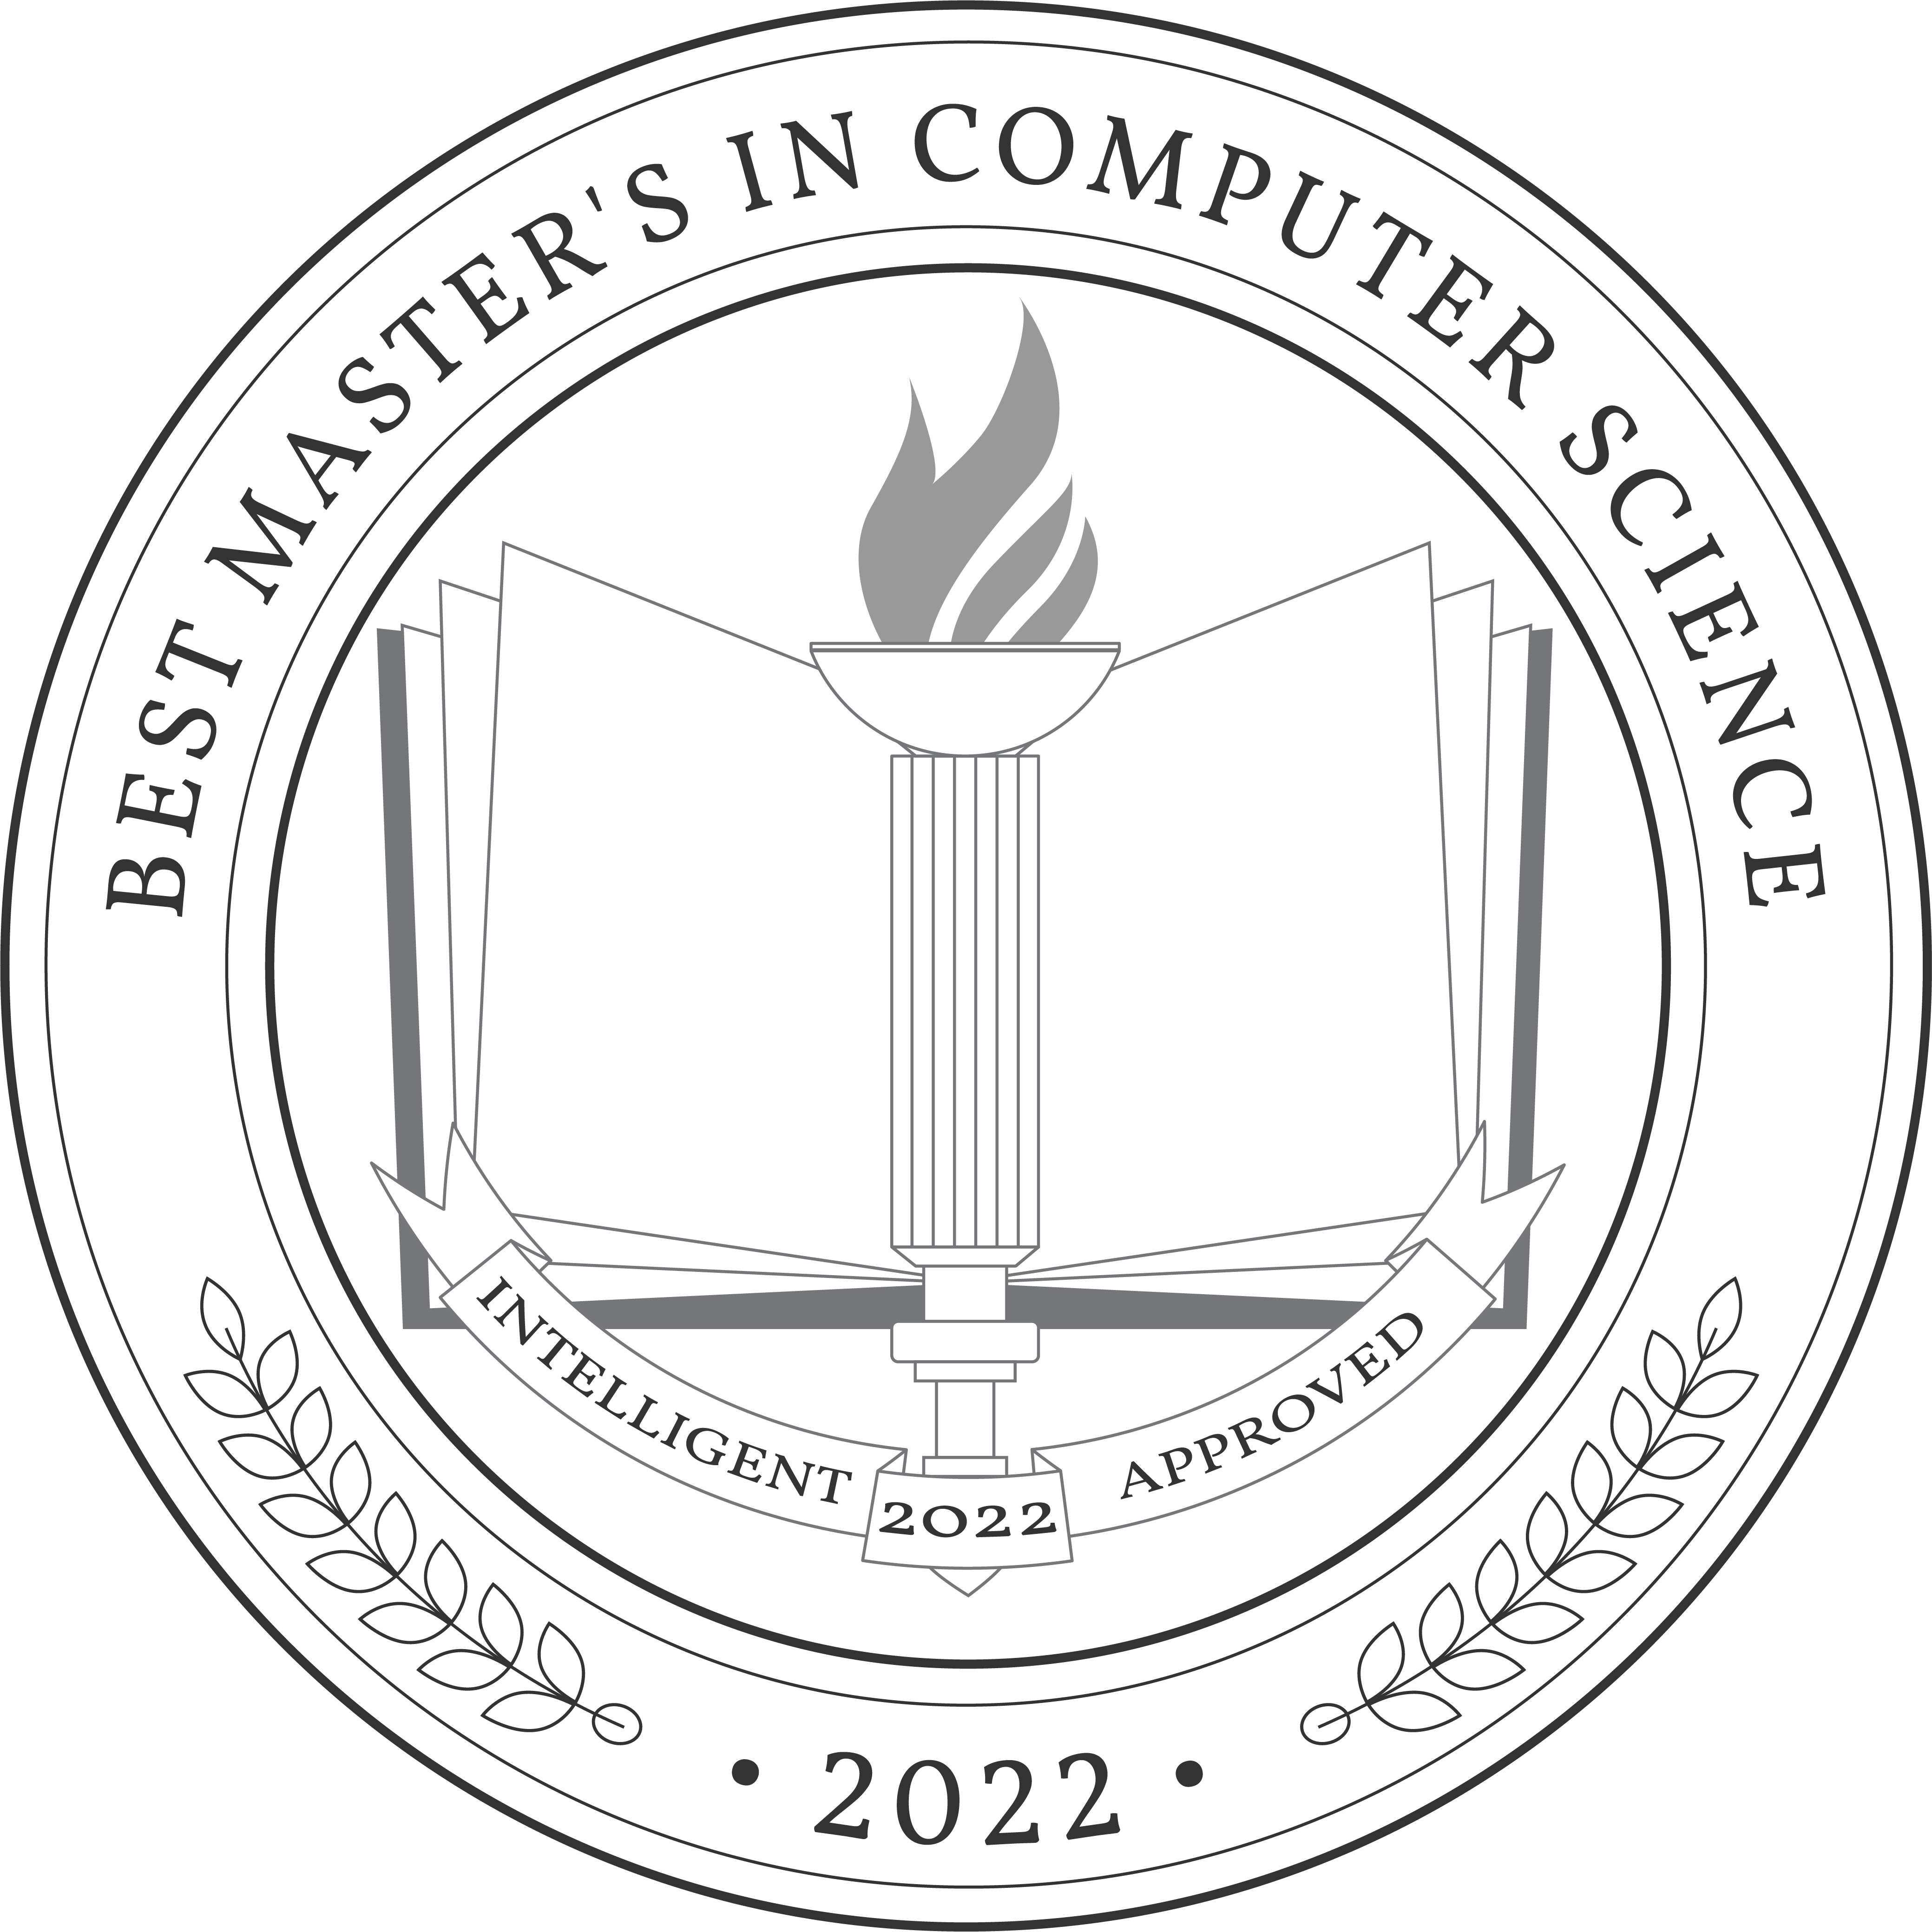 Best Online Master's in Computer Science Degree Programs